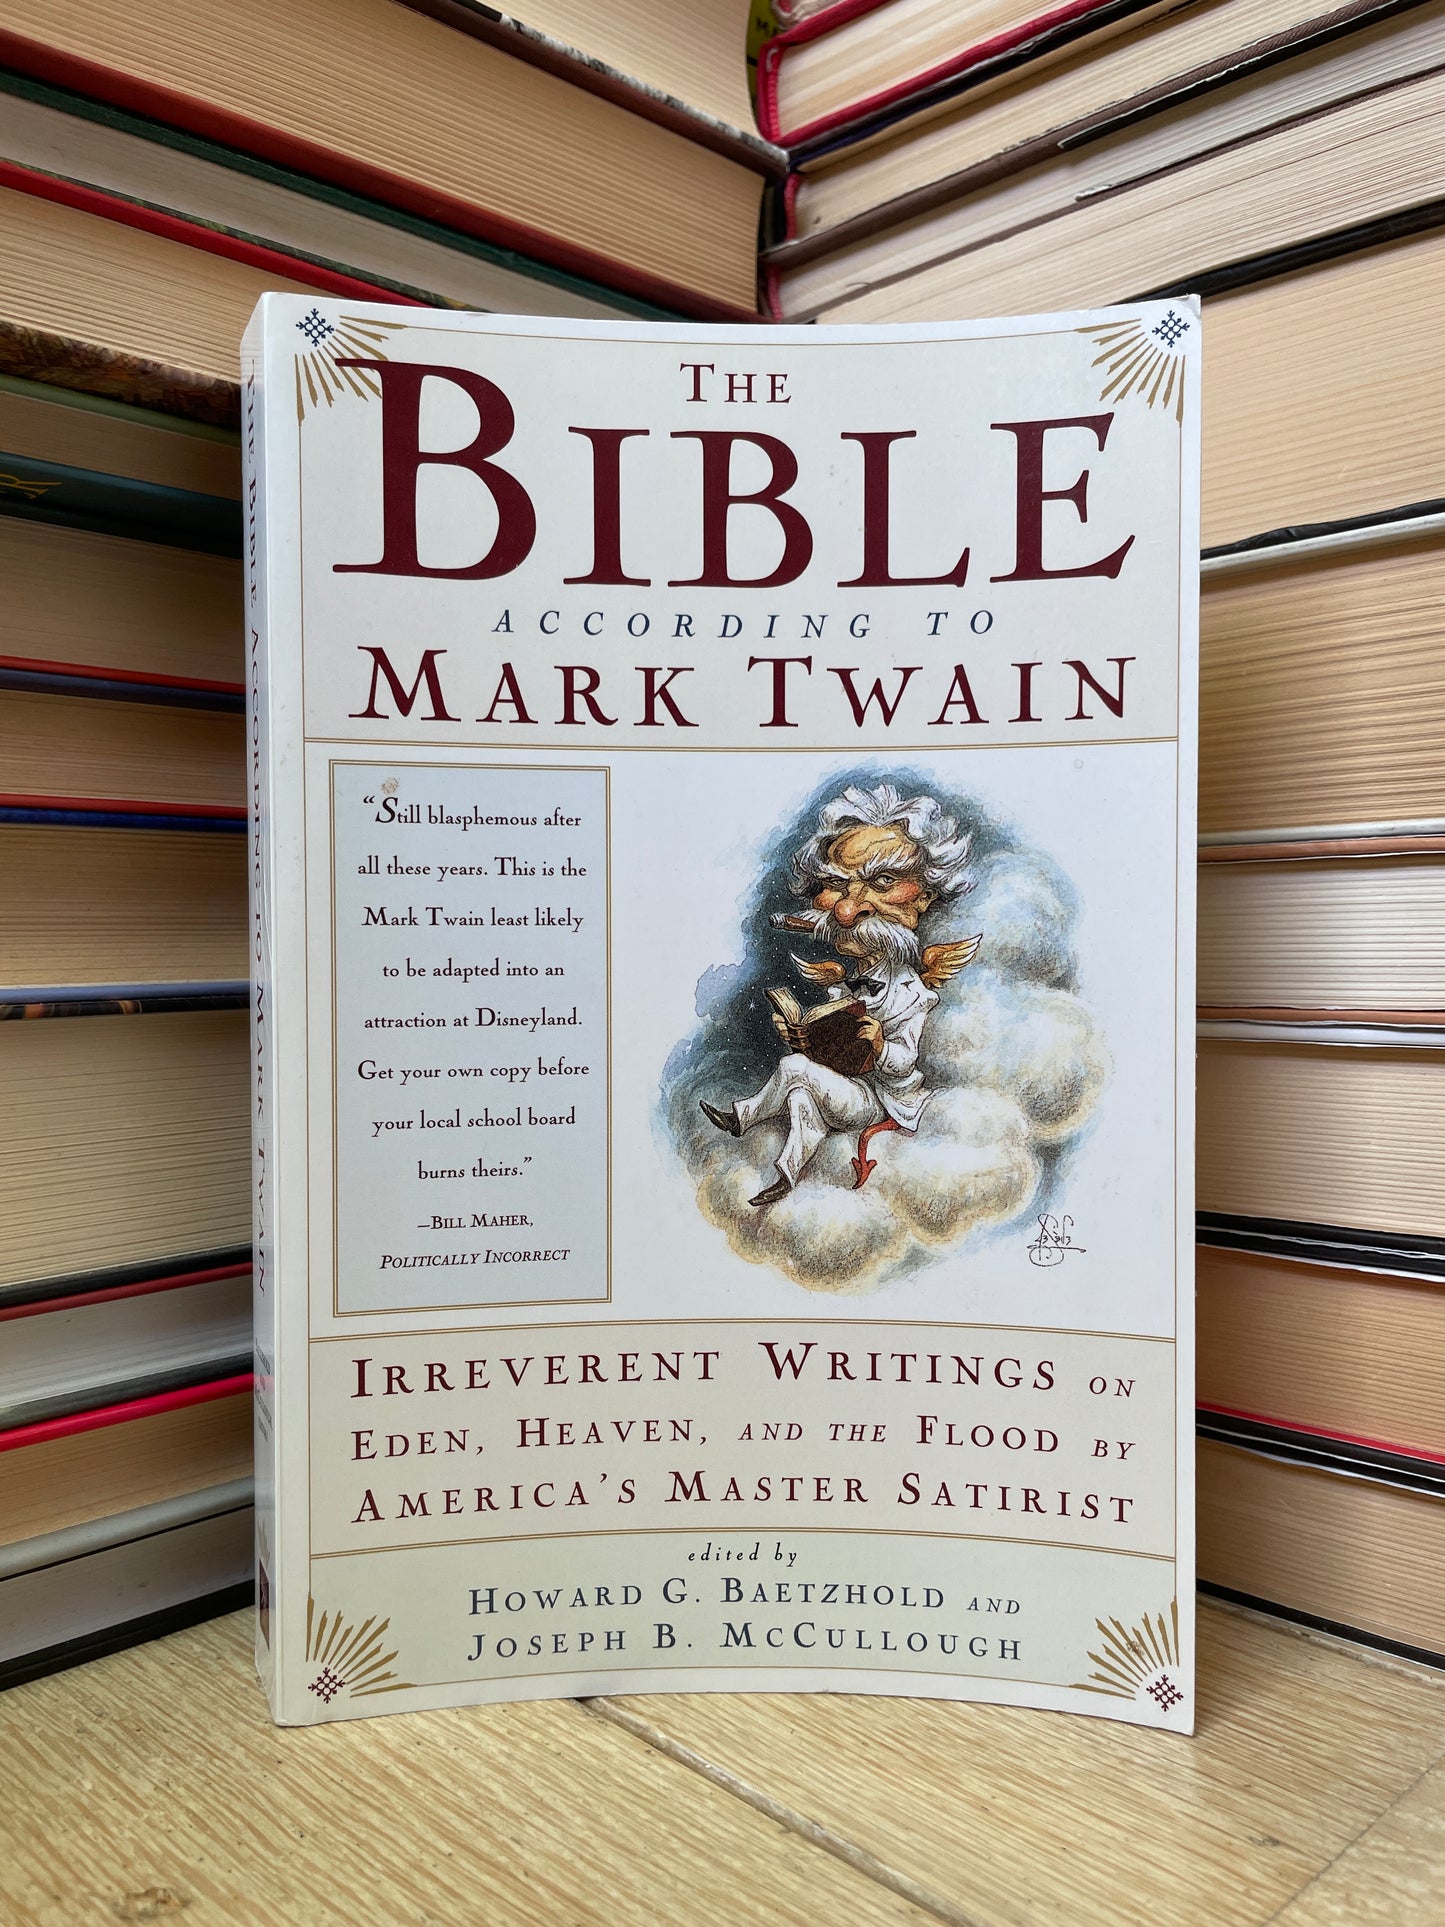 Mark Twain, Howard G. Baetzhold - The Bible According to Mark Twain